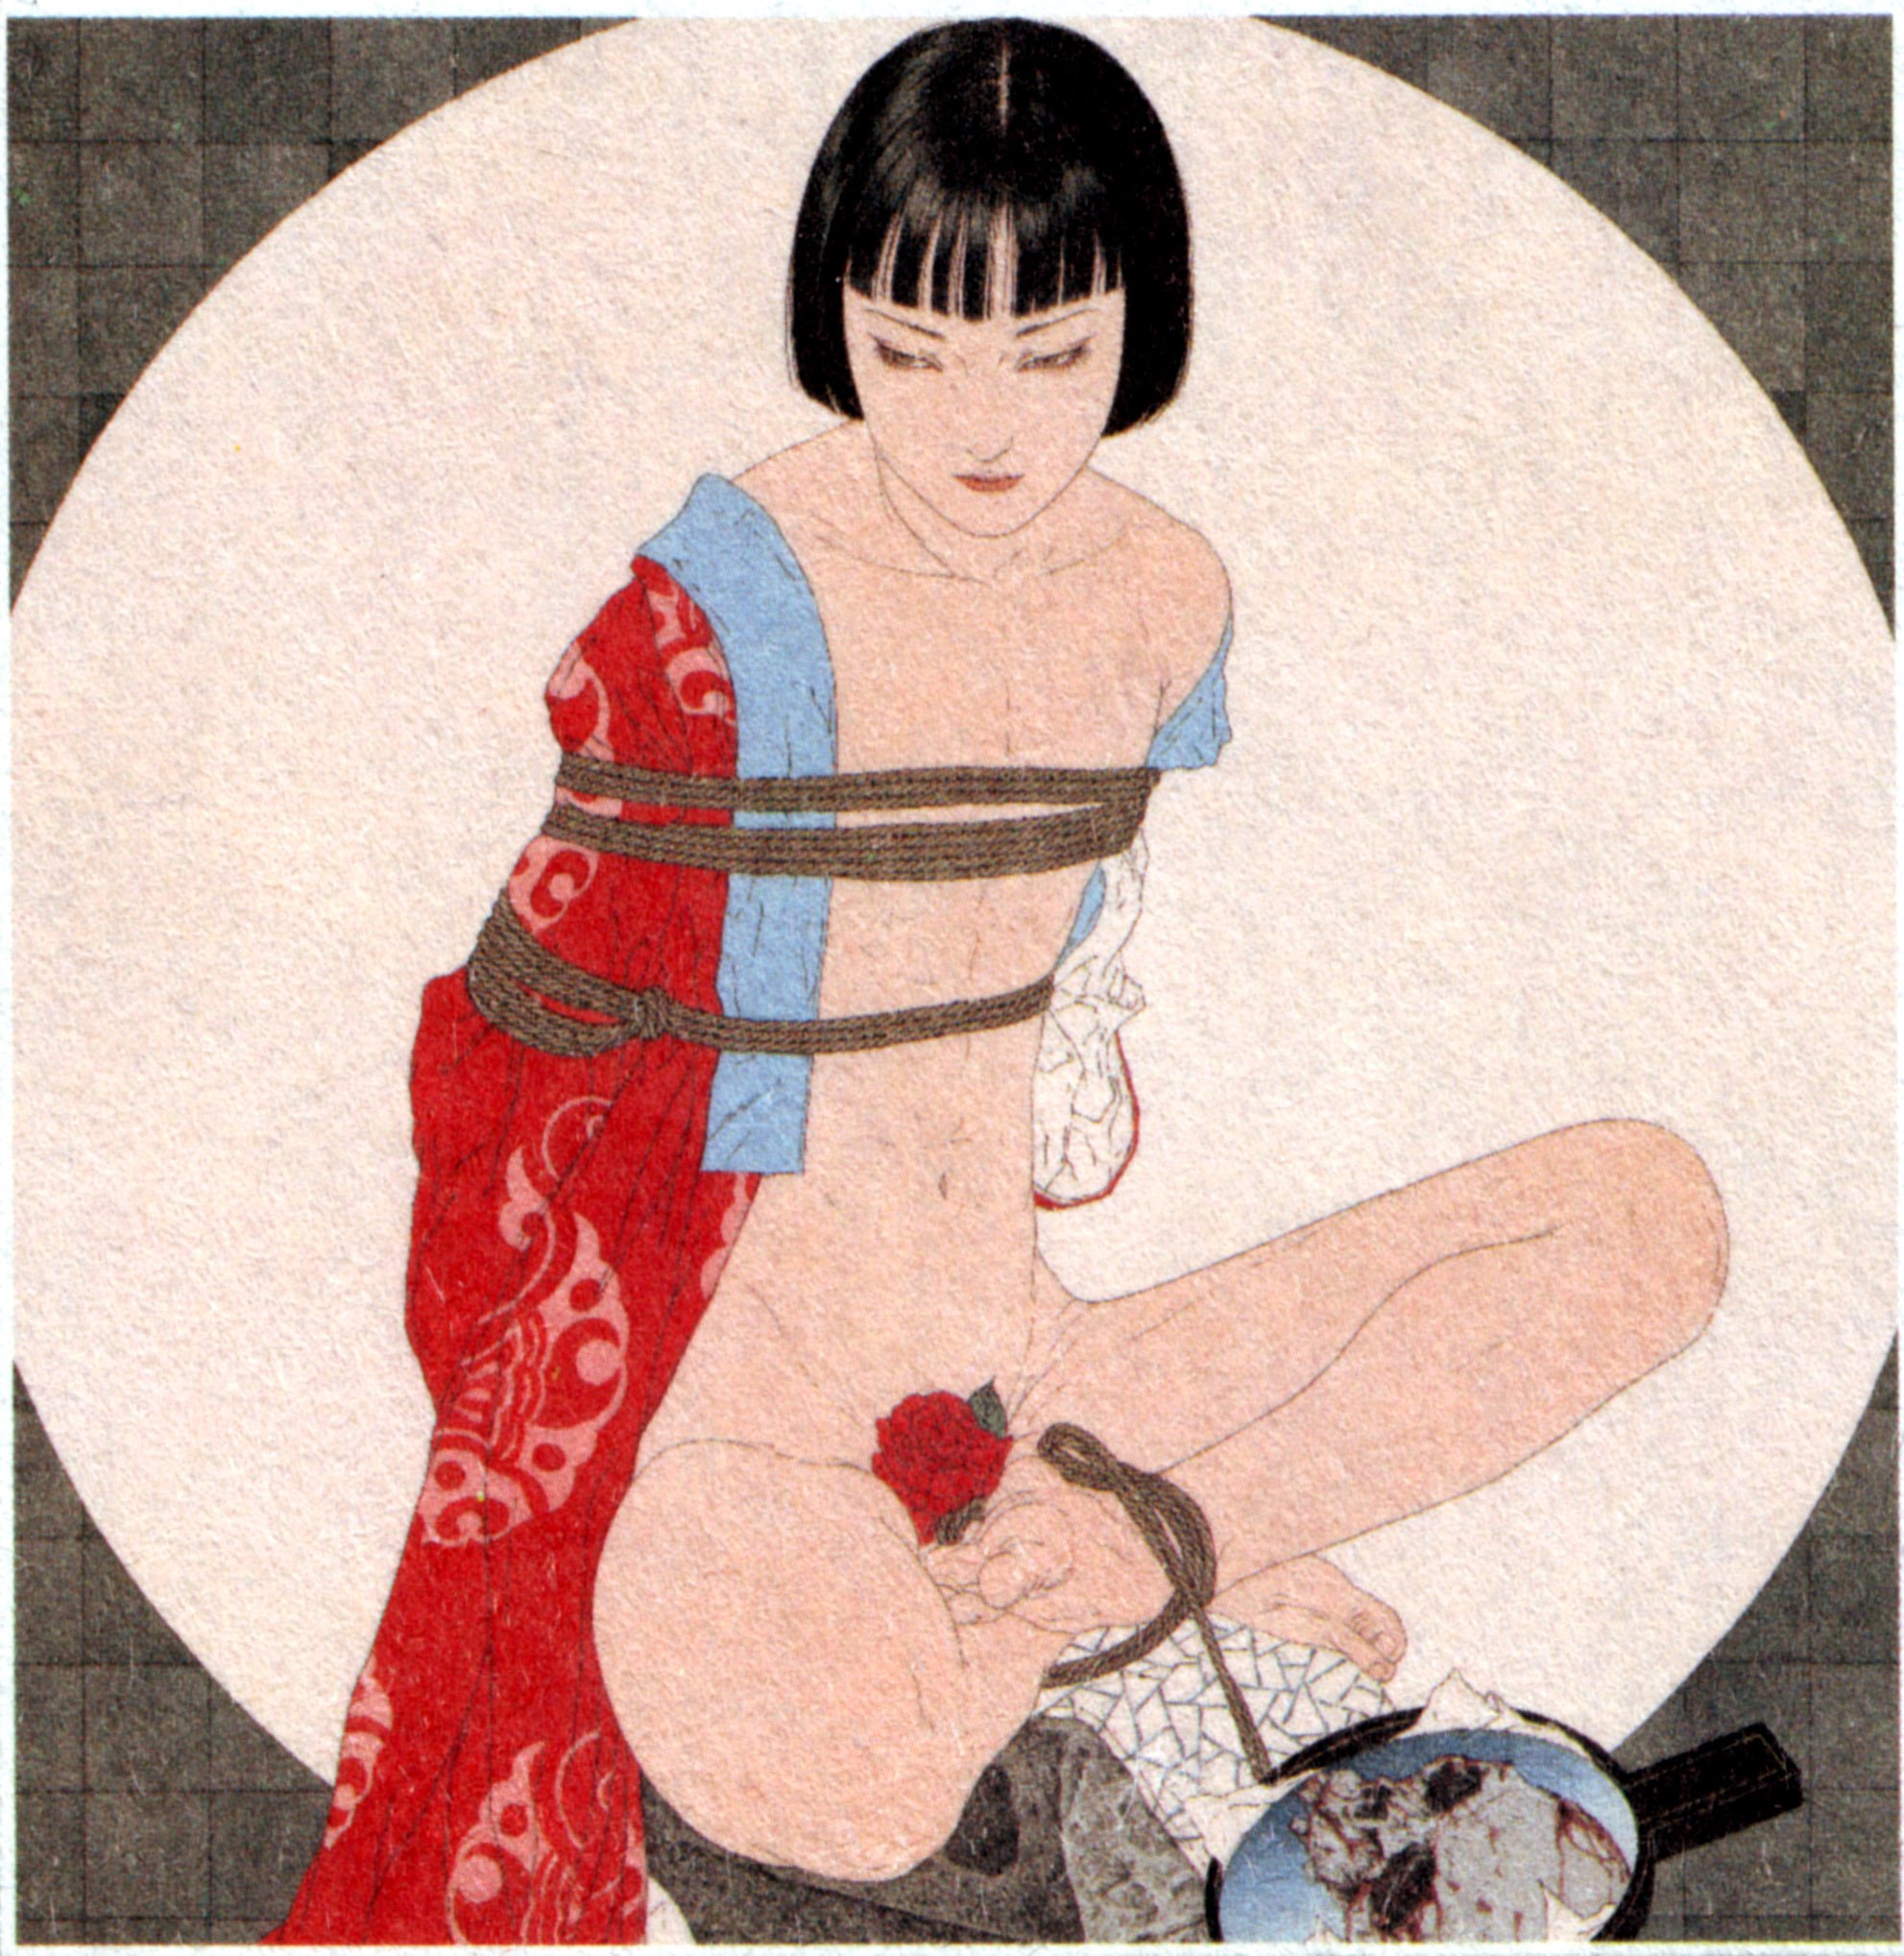 takato-yamamoto-ilustração-sexo-erotismo-sadomasoquismo-bondage-dionisio-arte-18